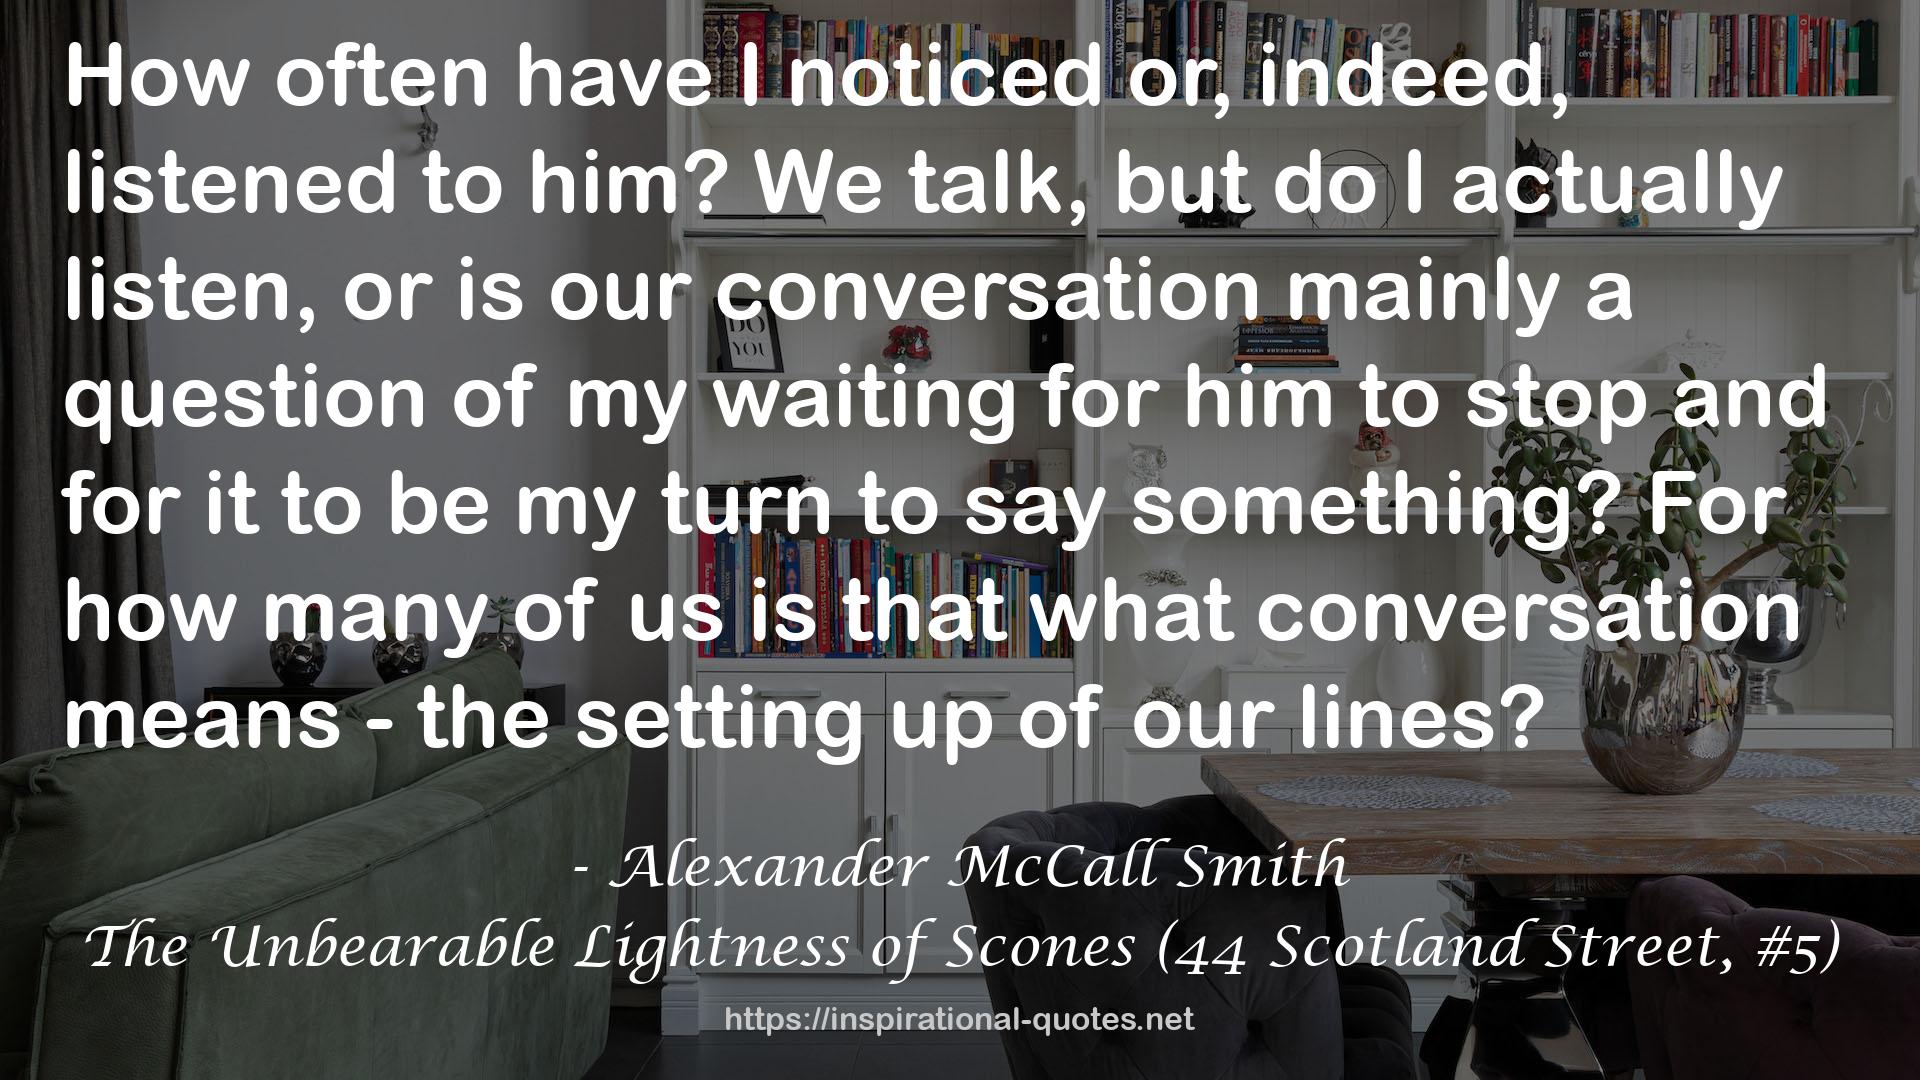 The Unbearable Lightness of Scones (44 Scotland Street, #5) QUOTES